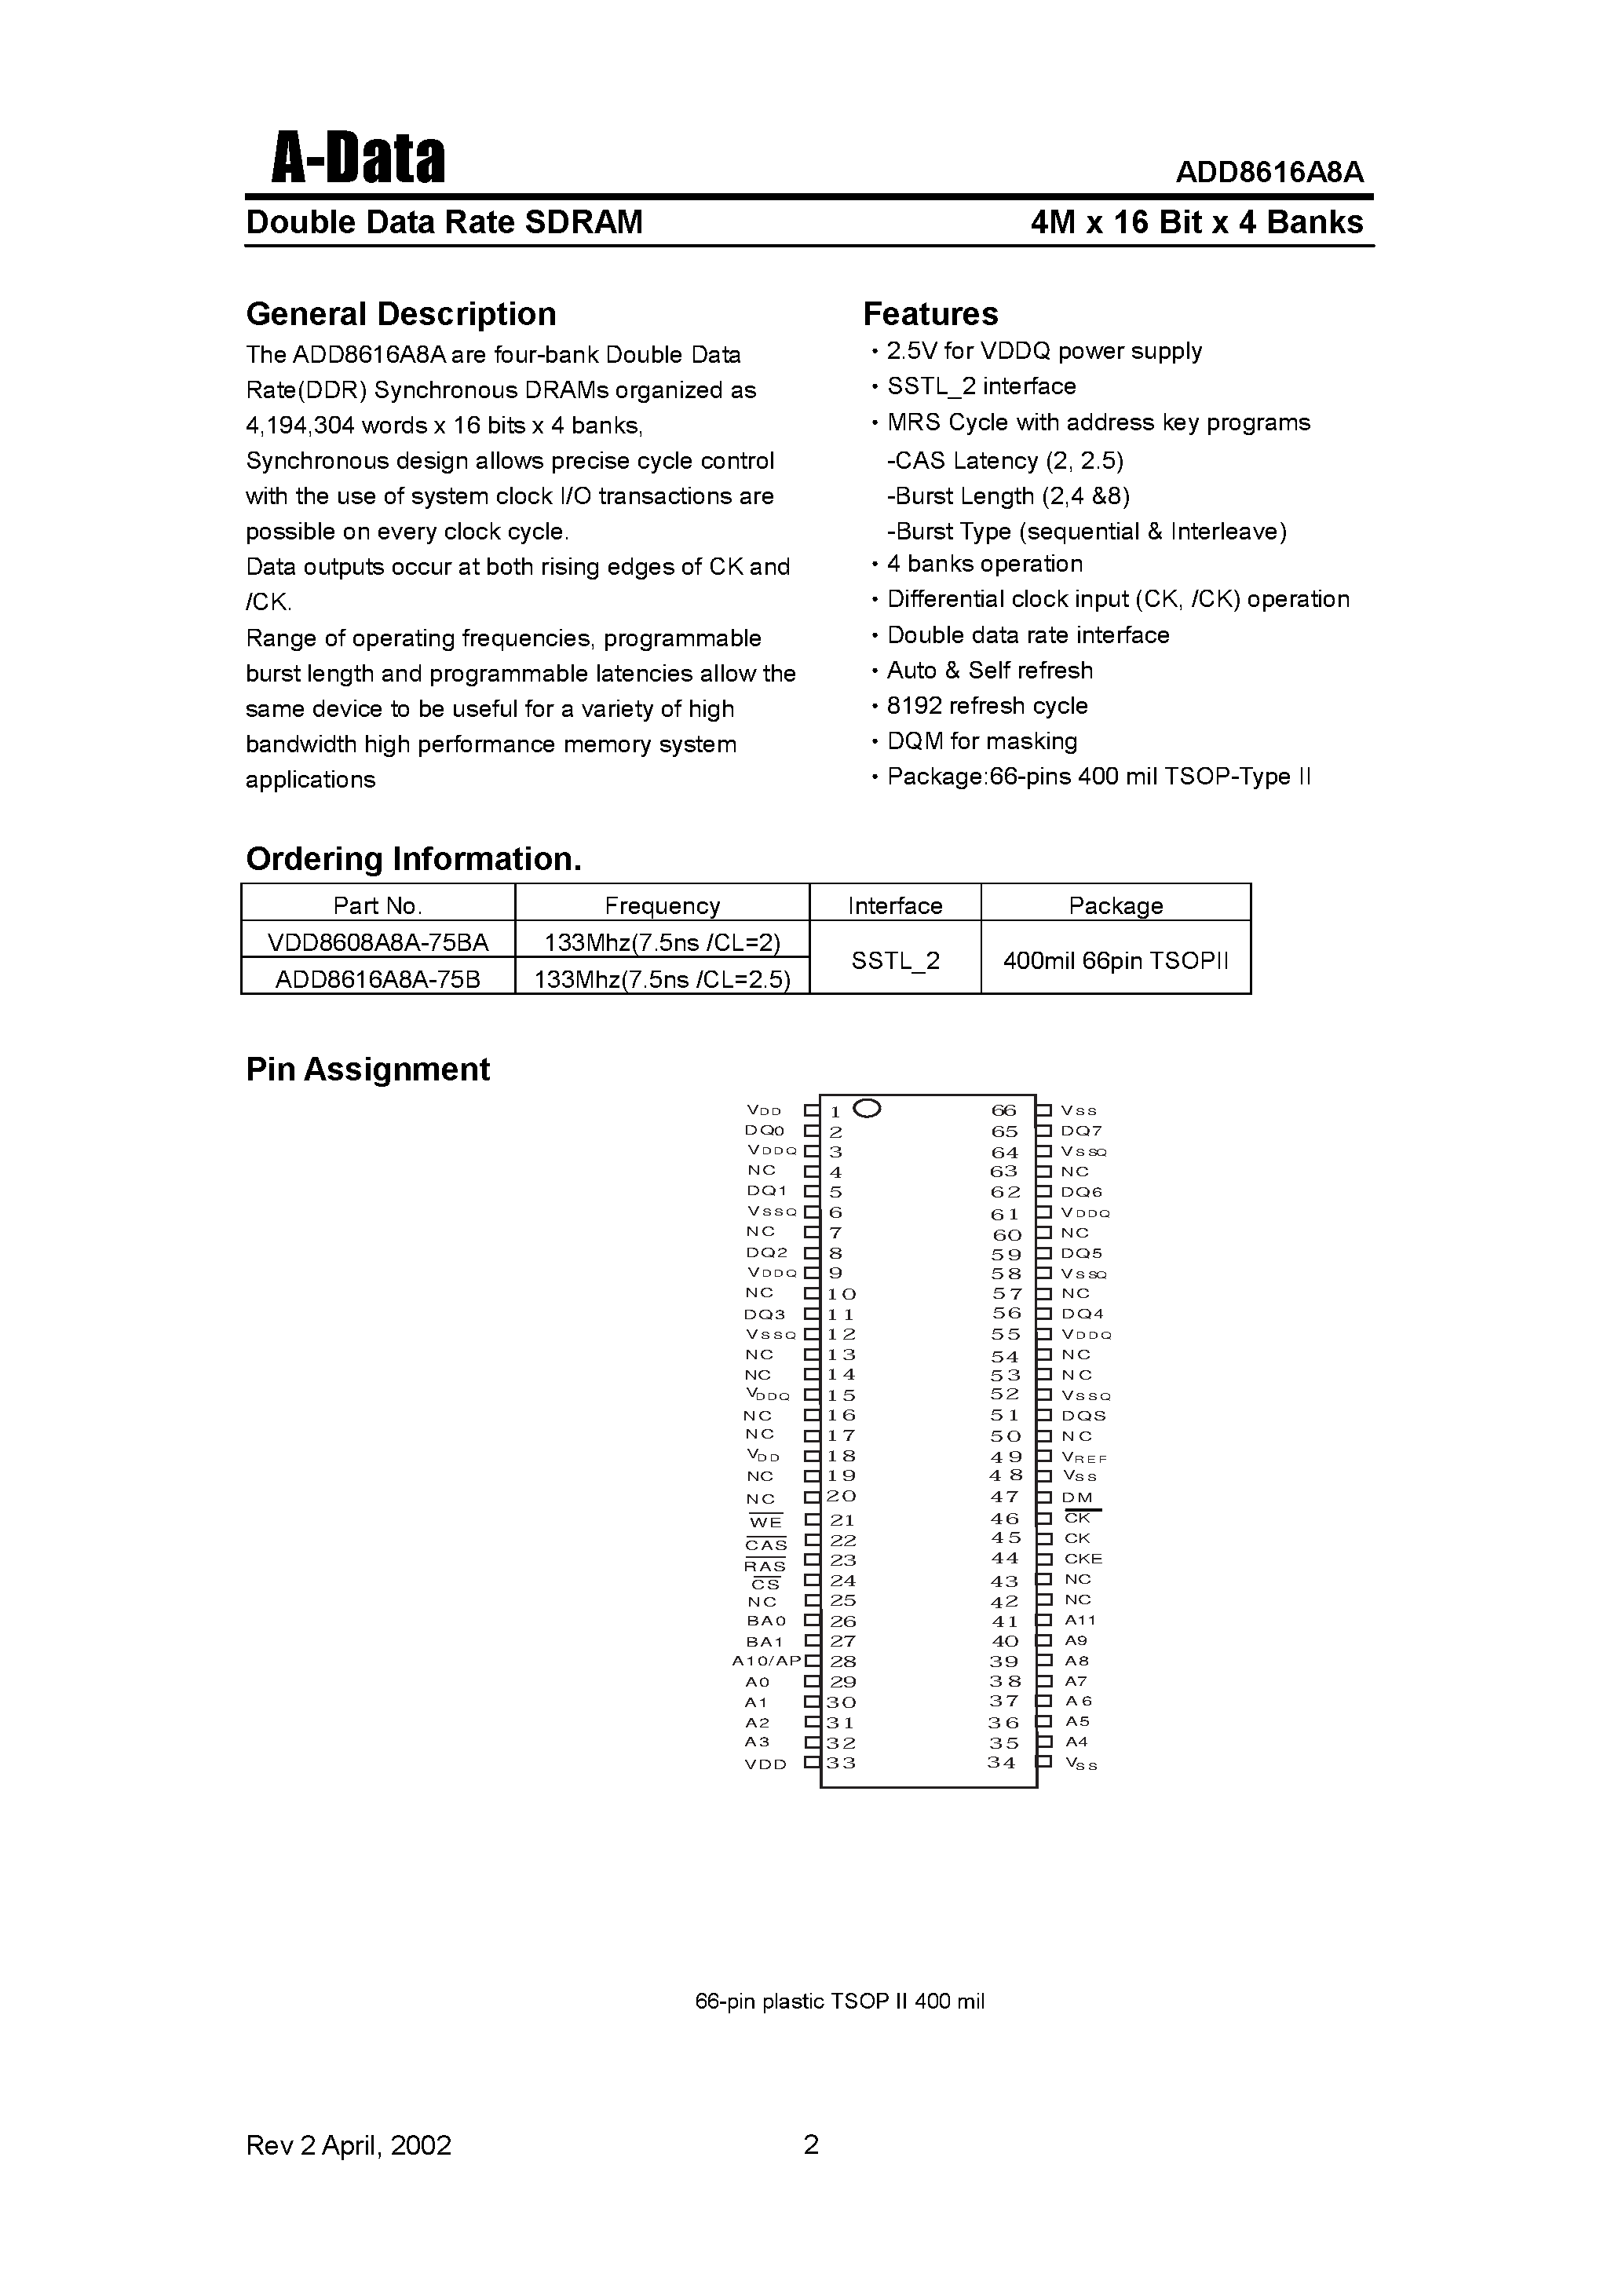 Даташит ADD8616A8A - DOUBLE DATA RATE SDRAM страница 2